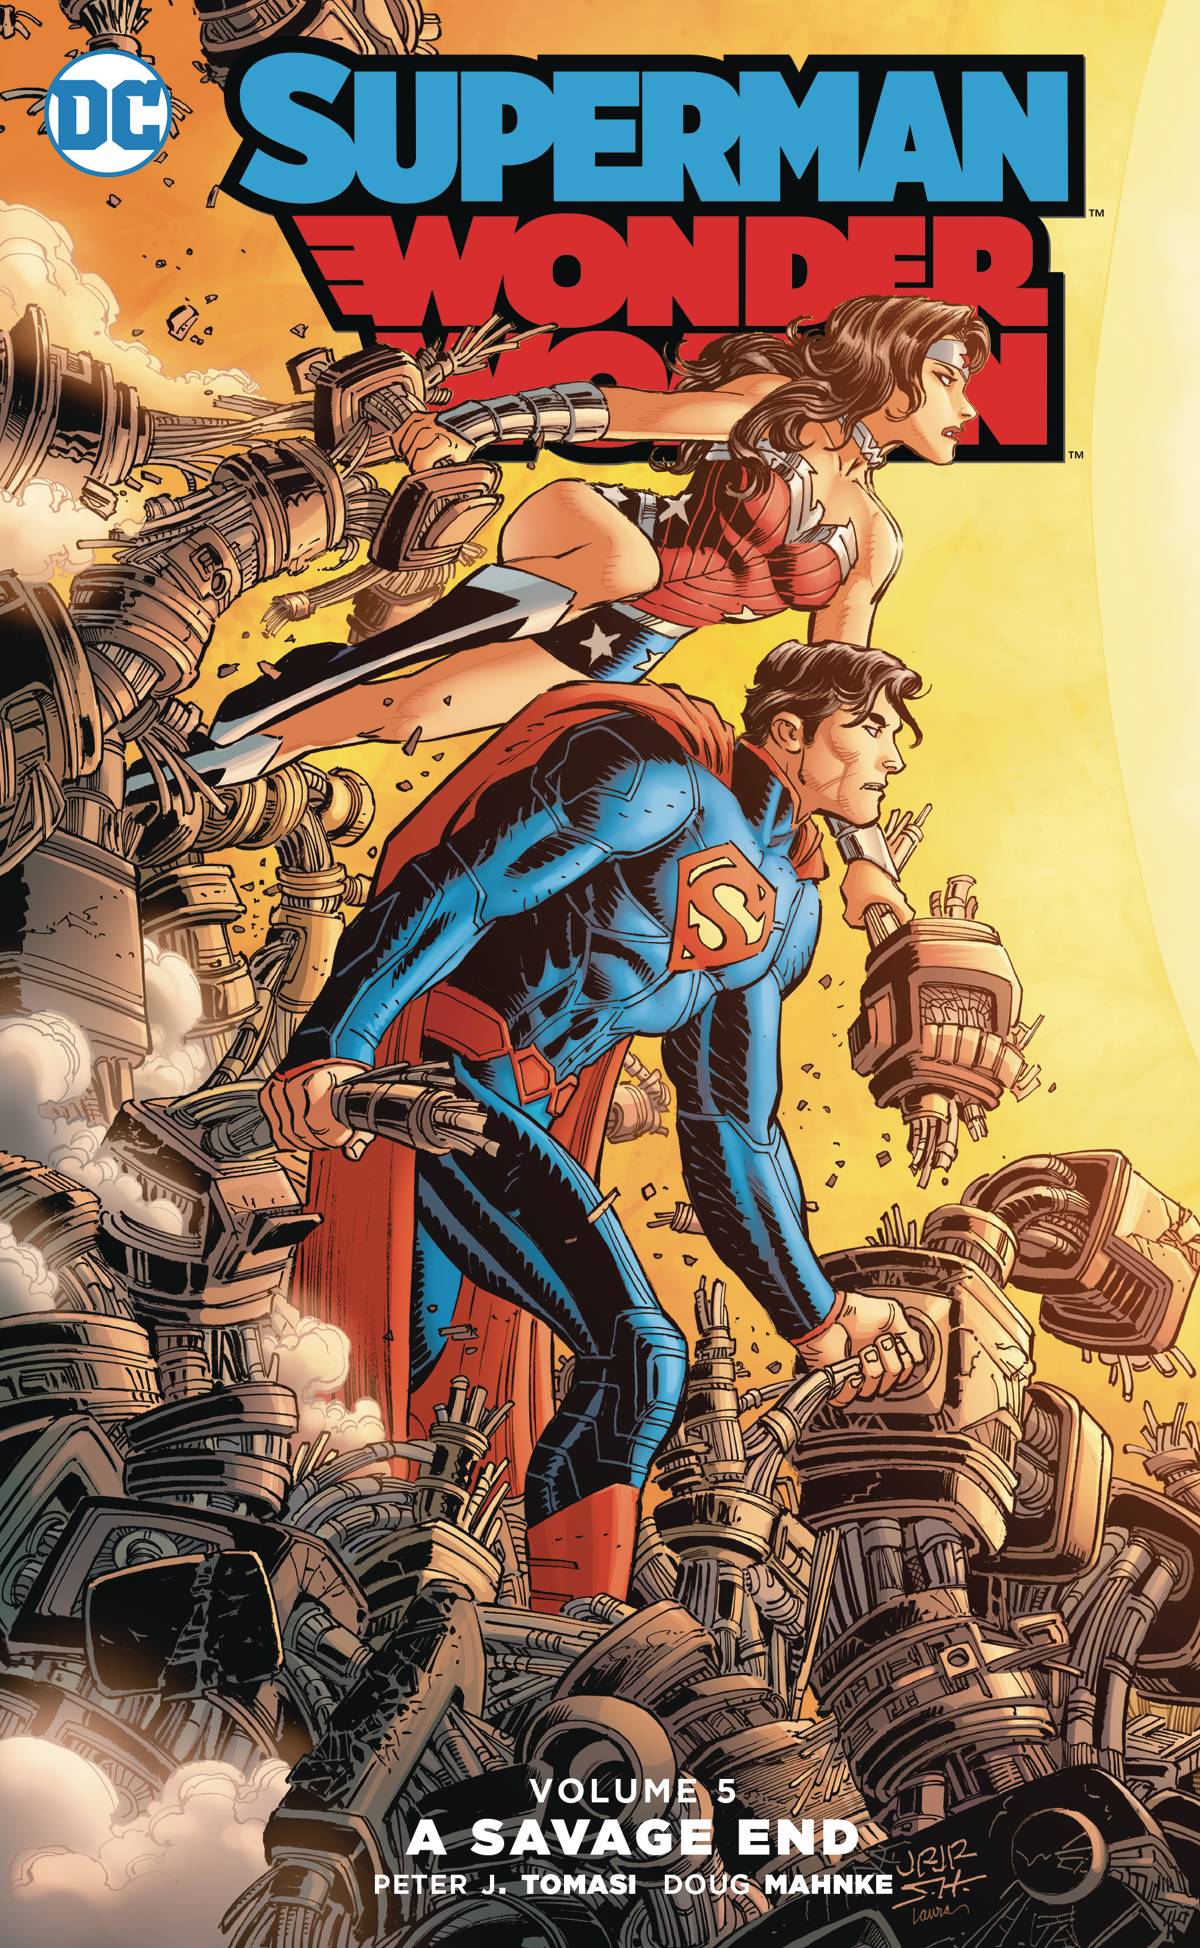 Superman Wonder Woman Graphic Novel Volume 5 Savage End